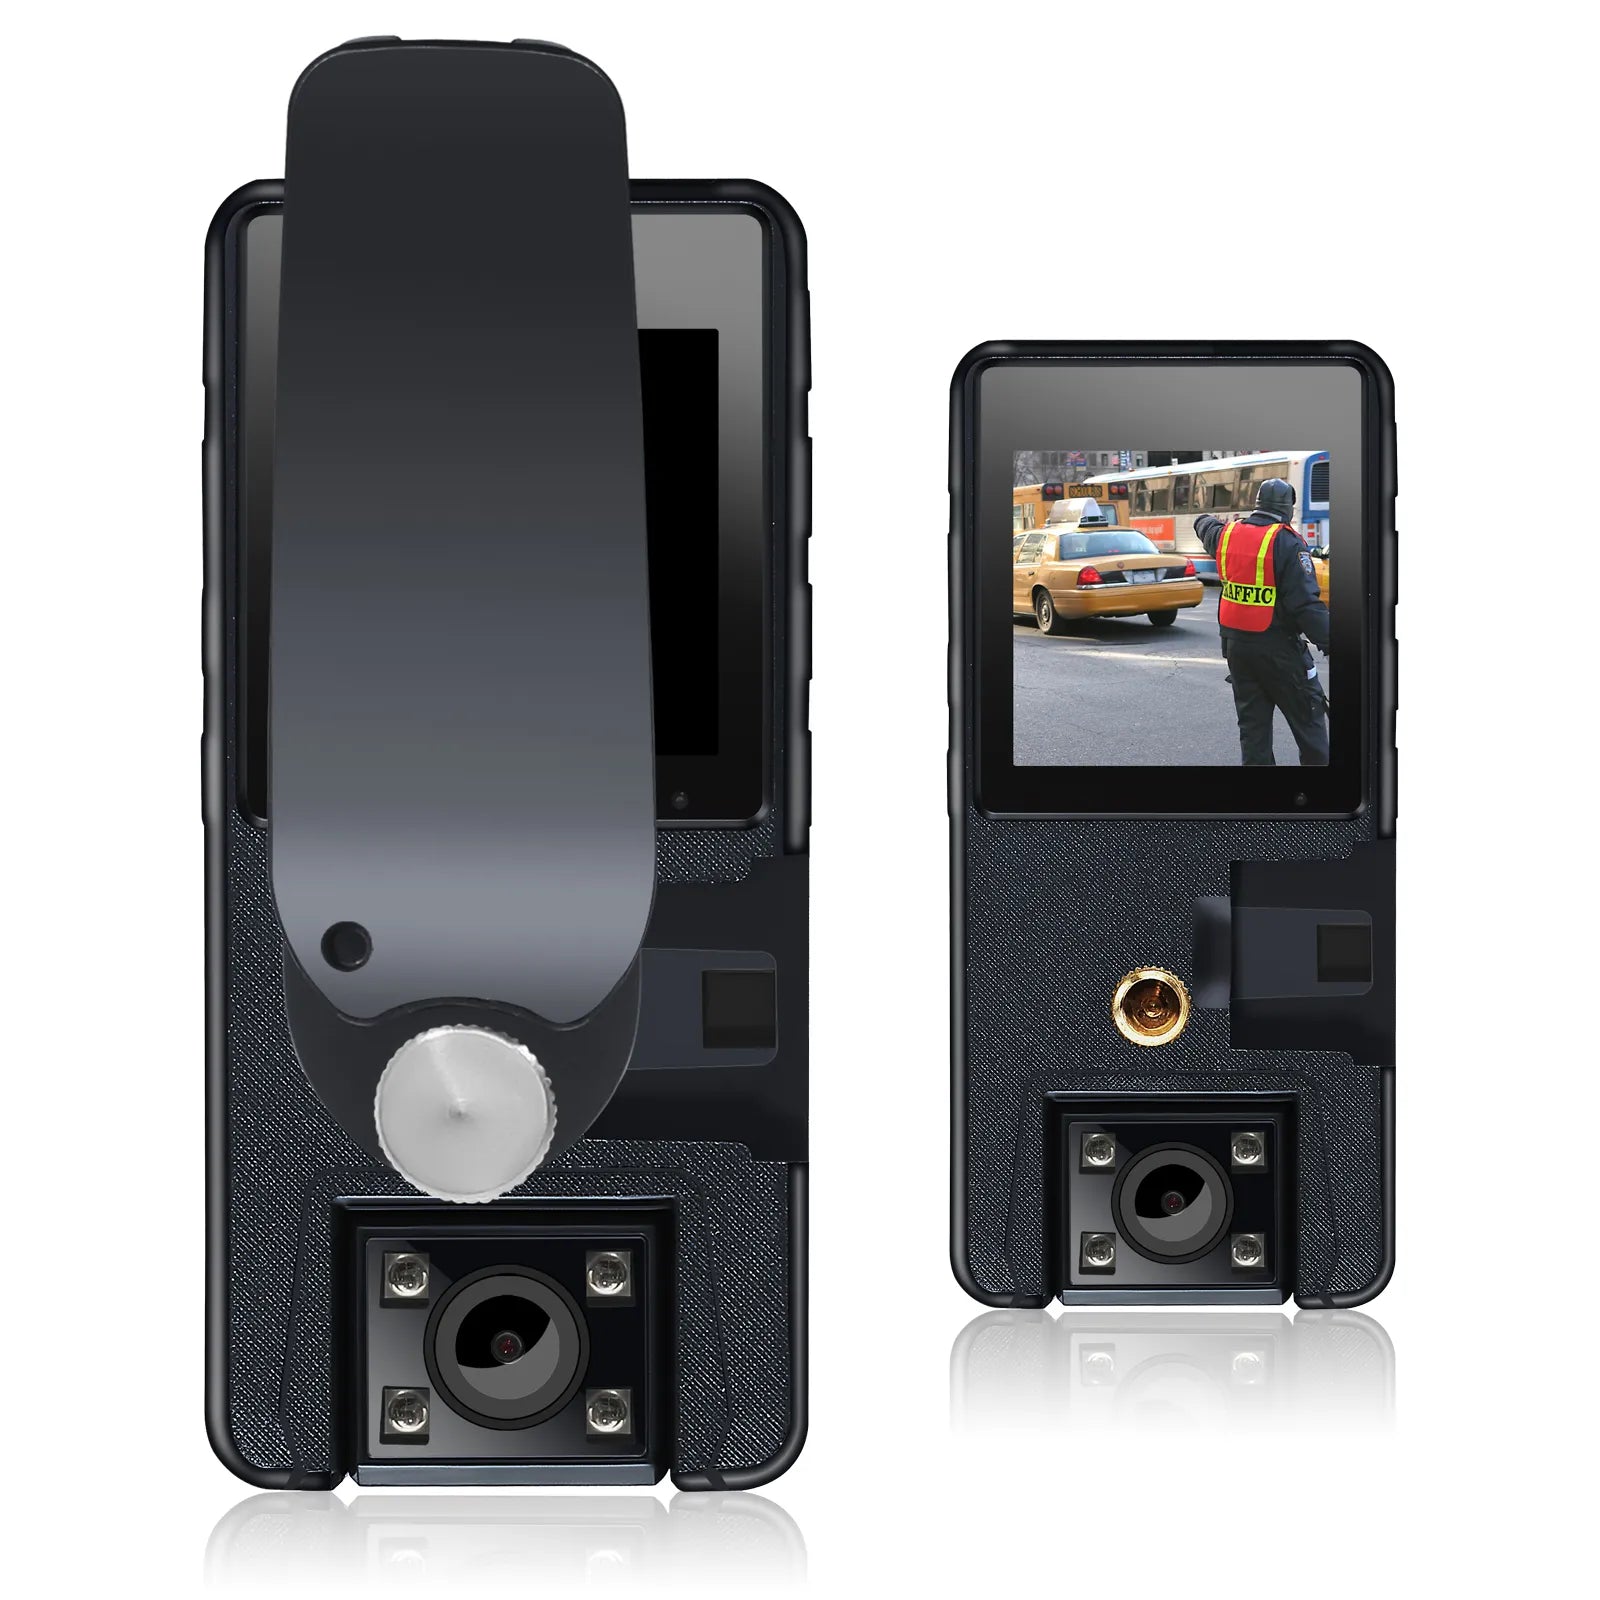 Vandlion A39 Full HD Mini Camera: Compact Body Mount Cam for Sports & Security  computerlum.com   